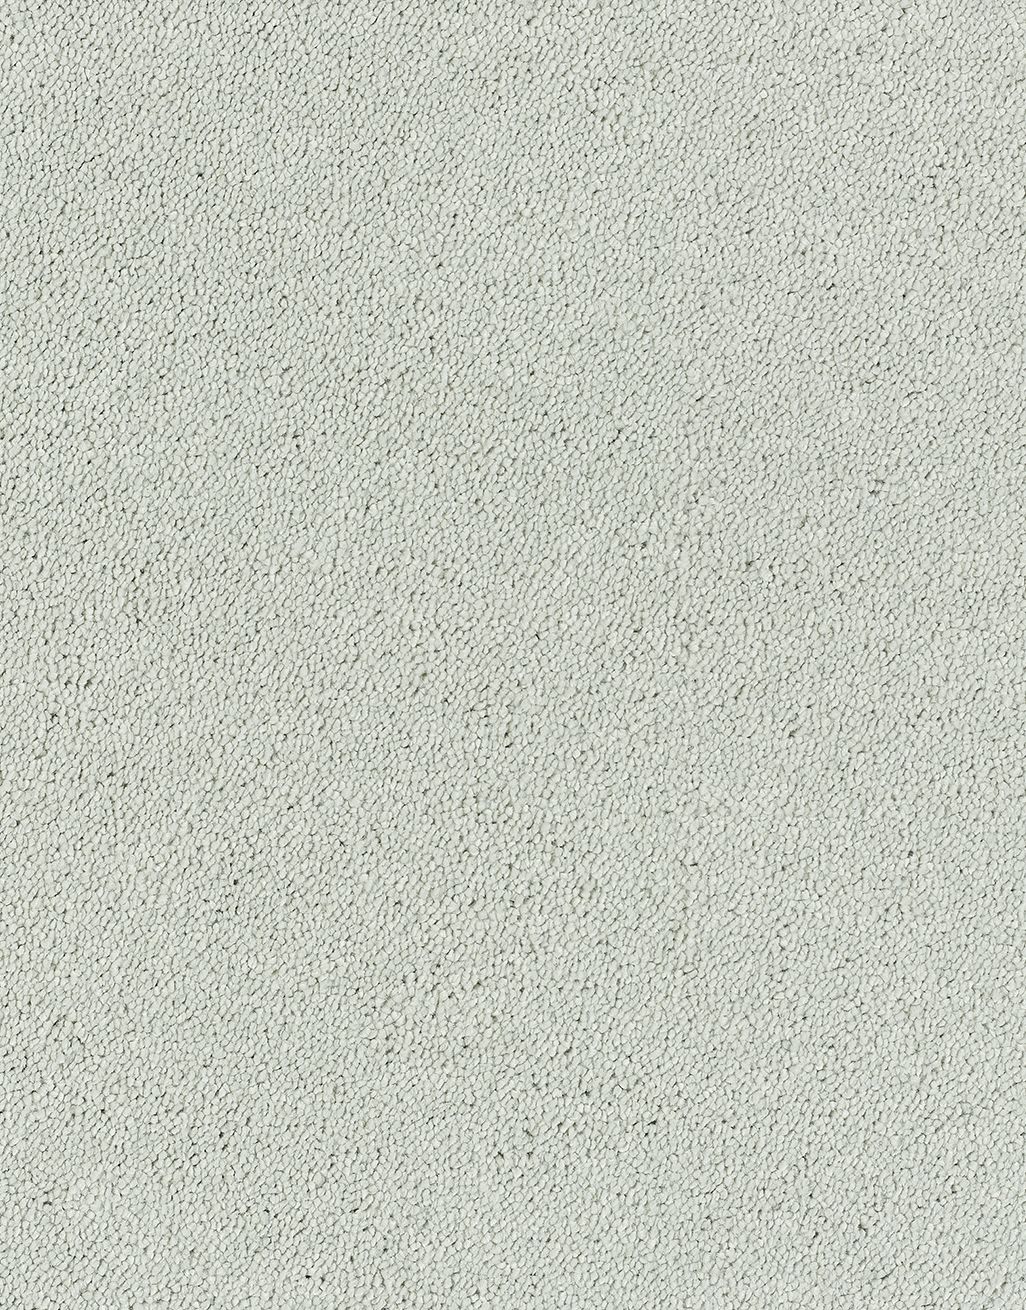 Bliss - Cloudy Grey [6.25m x 5m] 1